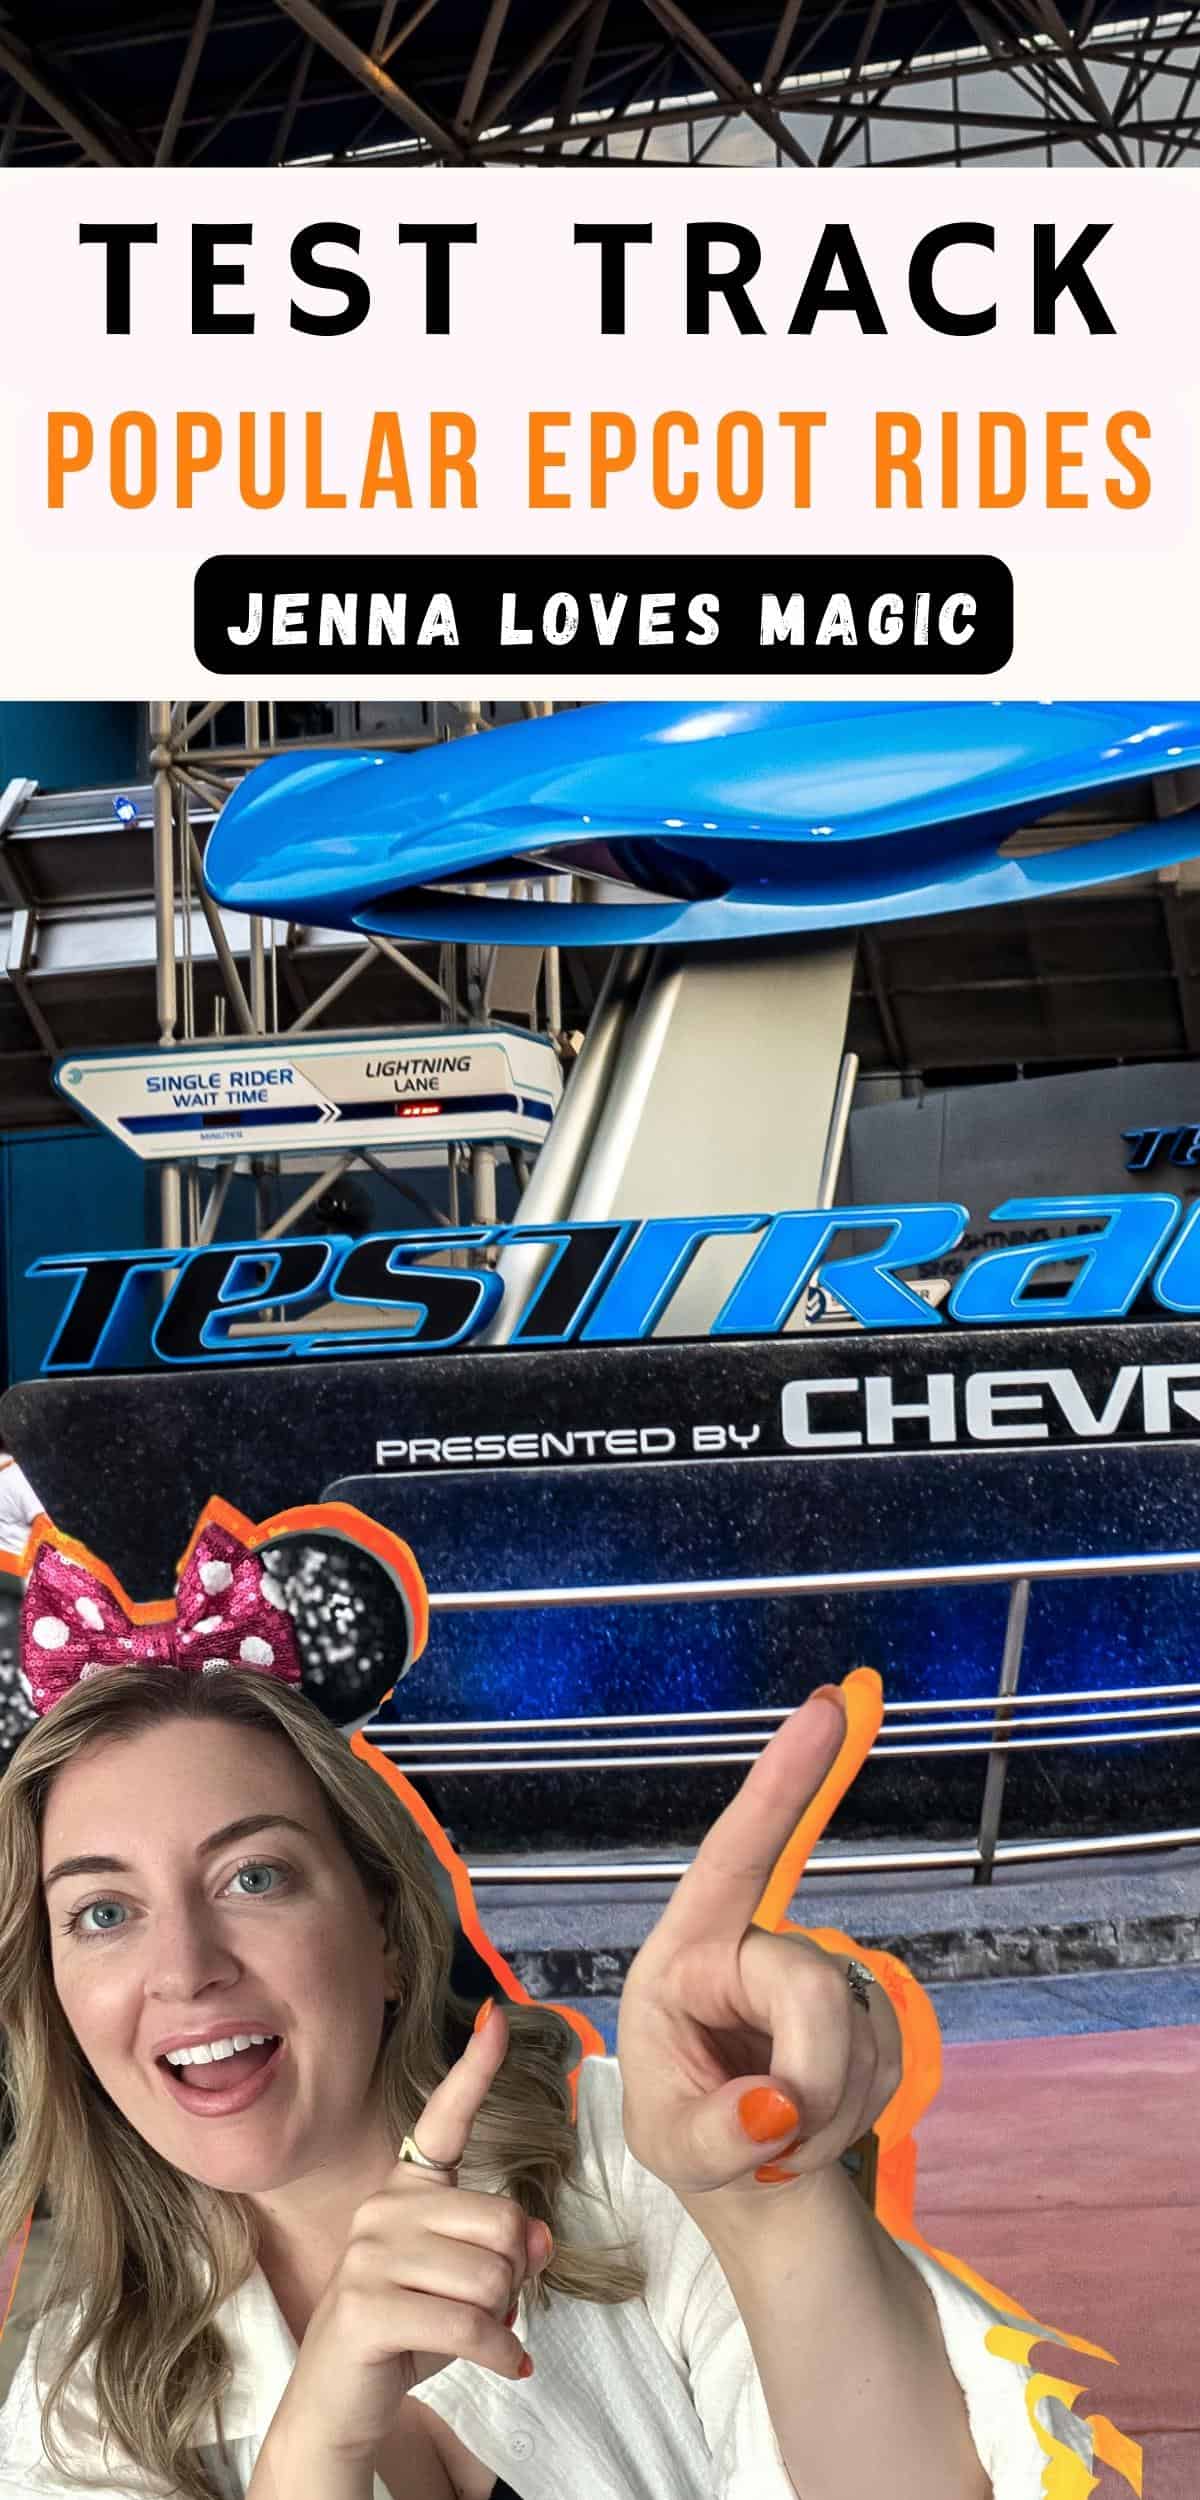 TEST TRACK WALT Disney World Ride in Epcot with Jenna Loves Magic logo